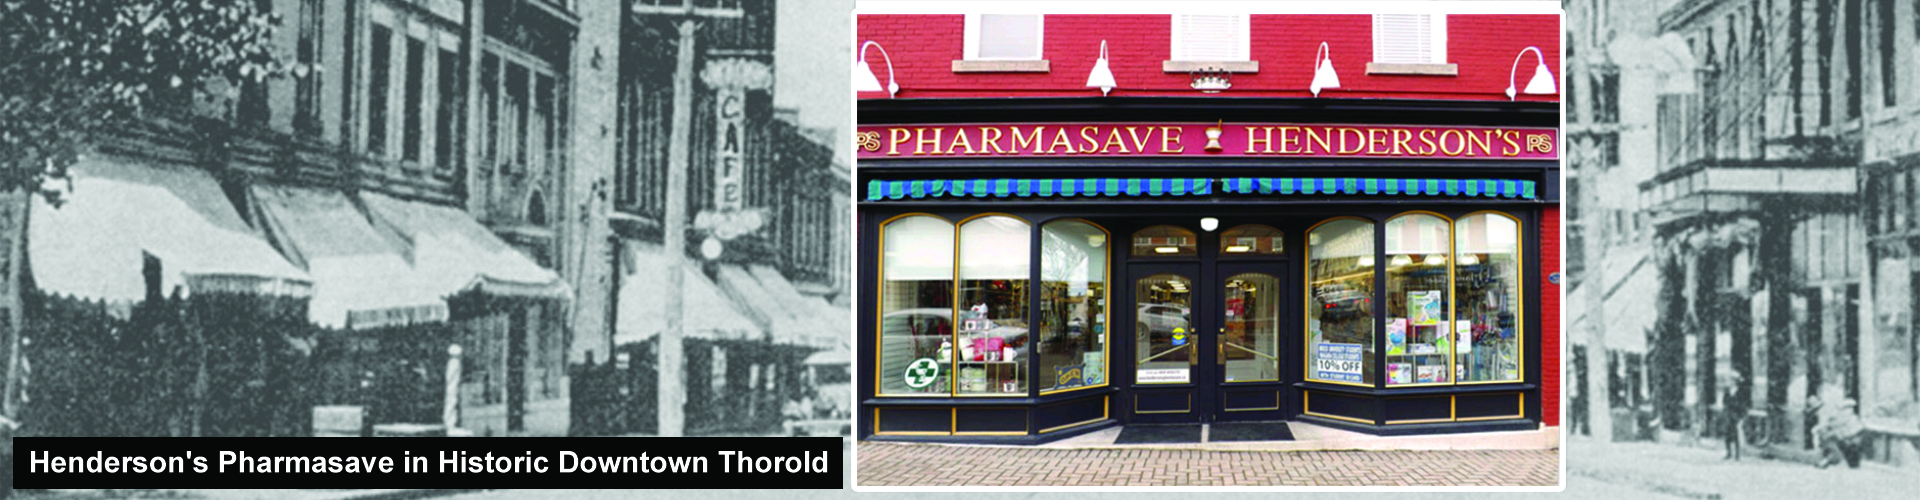 Henderson's Pharmasave Historic Downtown Thorold